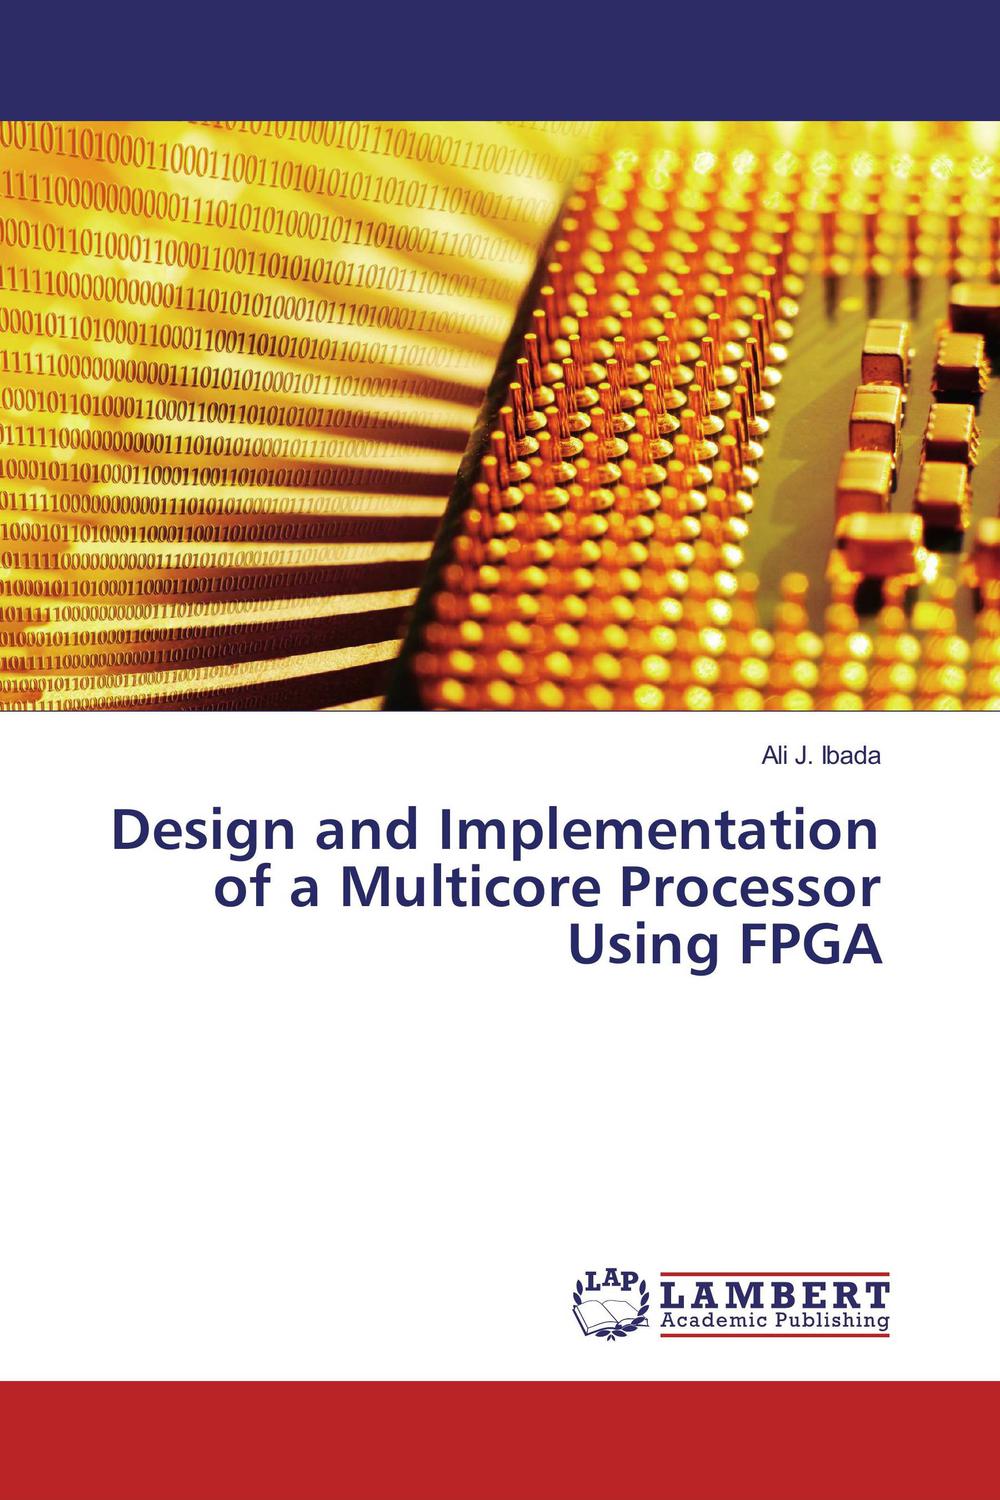 PDF] Design and Implementation of a Multicore Processor Using FPGA